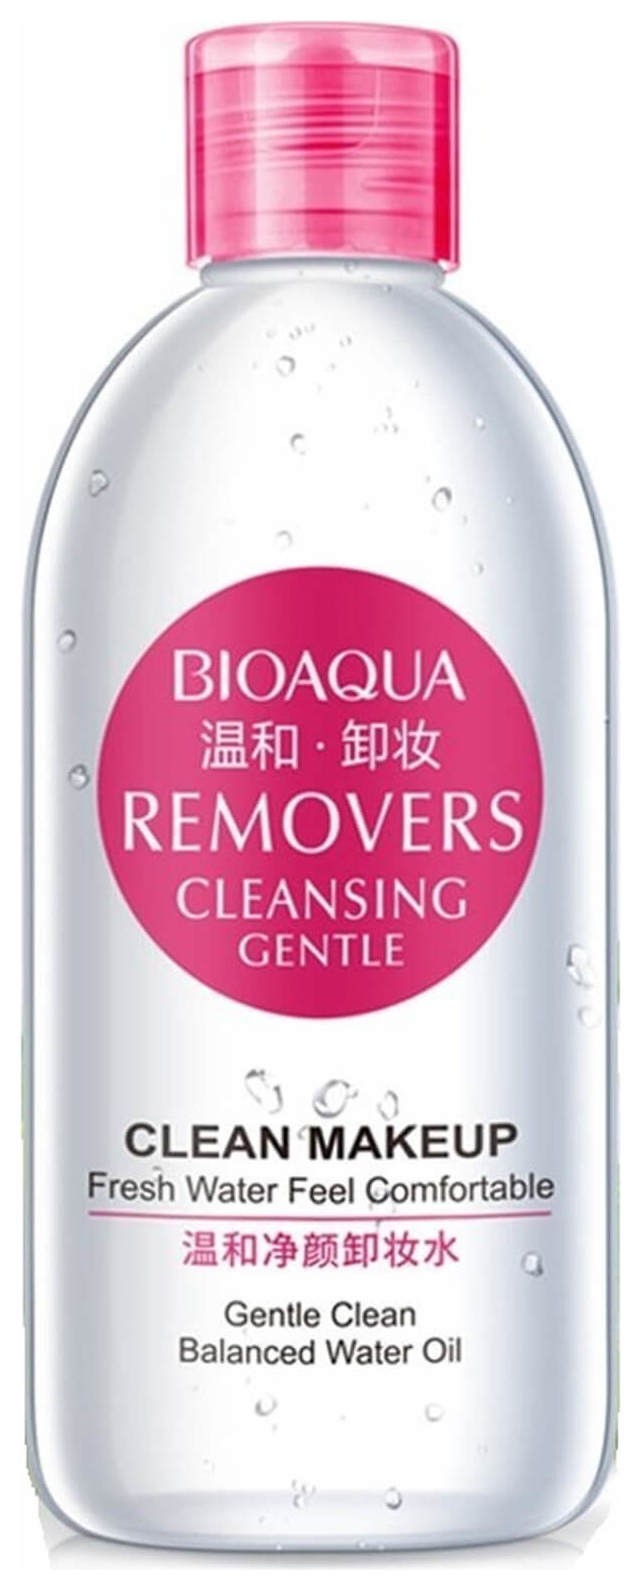 Мицеллярная вода Removers Cleansing Gentle для снятия макияжа отзывы